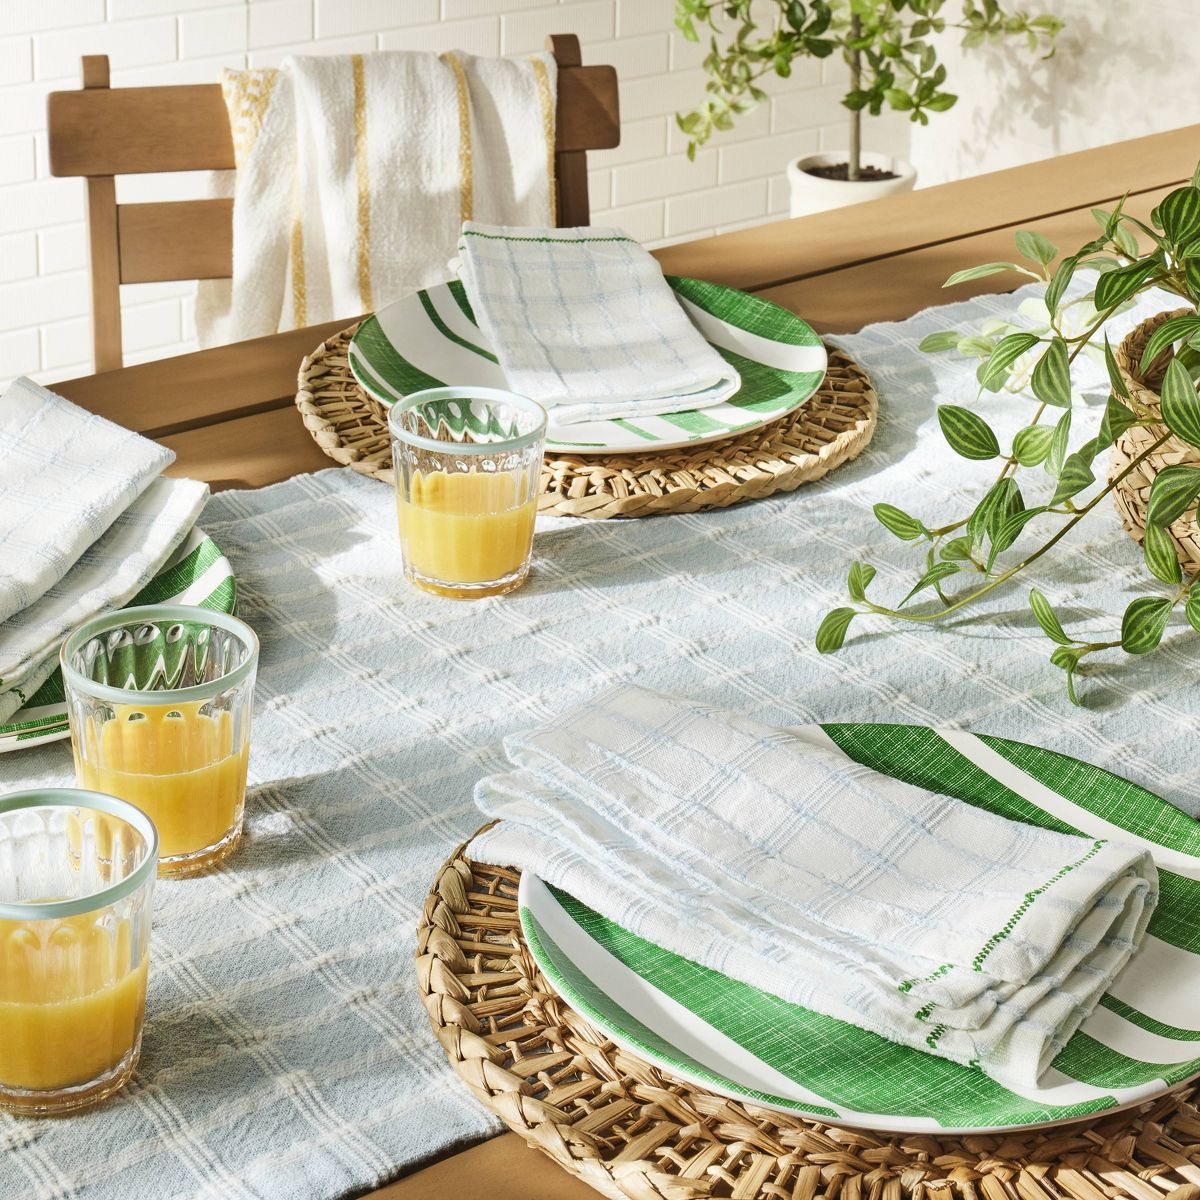 10.5" Distressed Stripe Melamine Dinner Plates Green/Cream - Hearth & Hand™ with Magnolia | Target